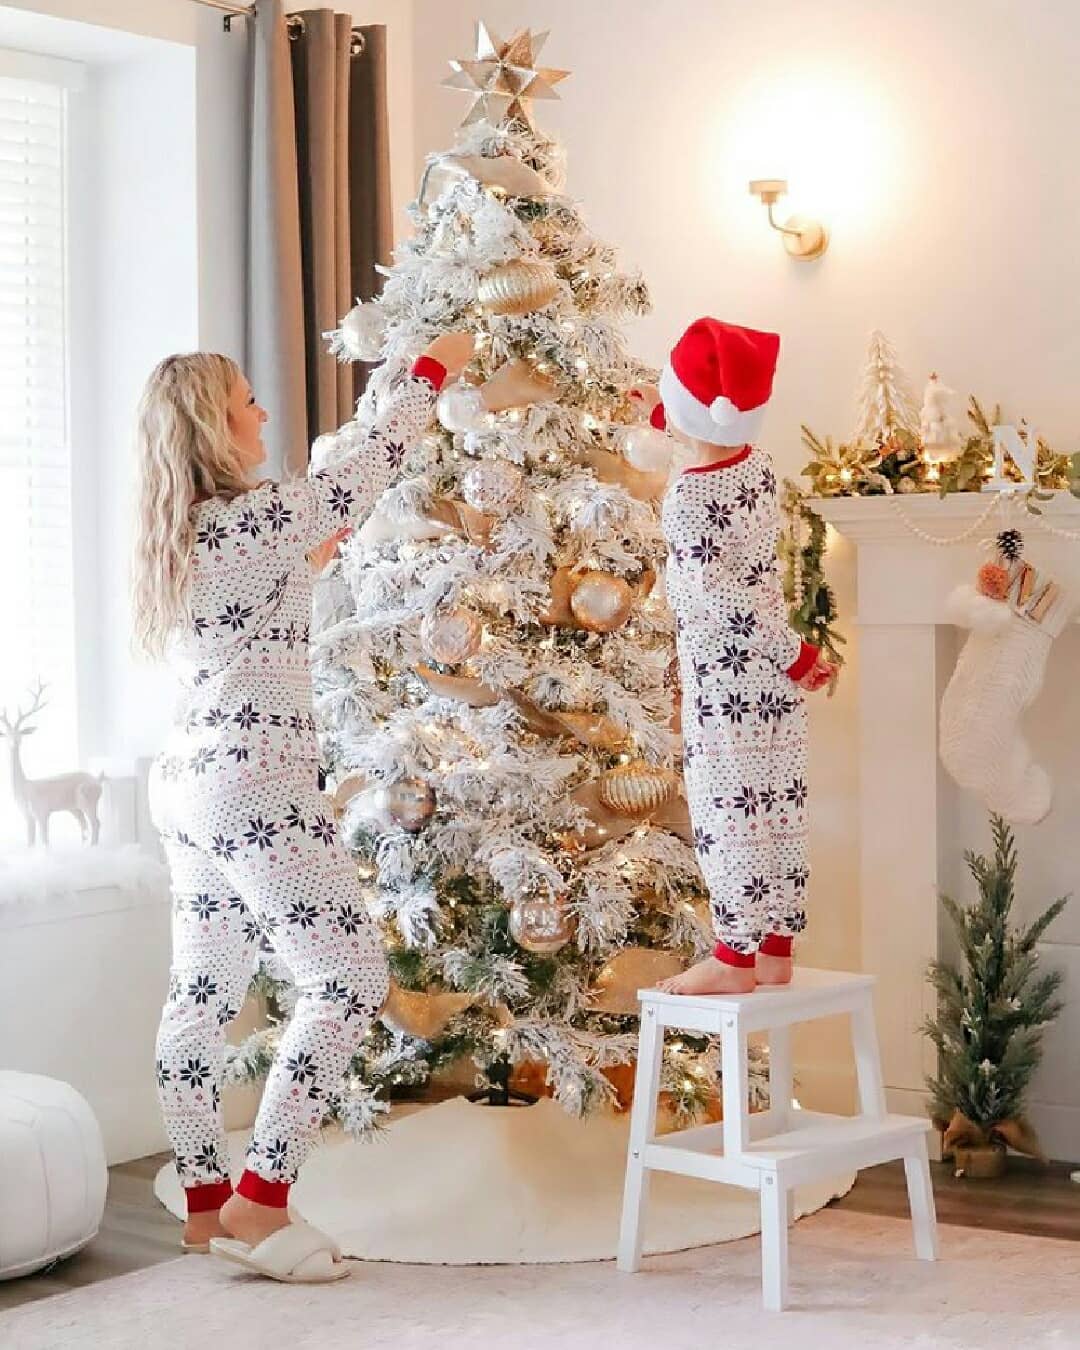 Pijamas Navidad Familia <br/> Mapas de Nieve